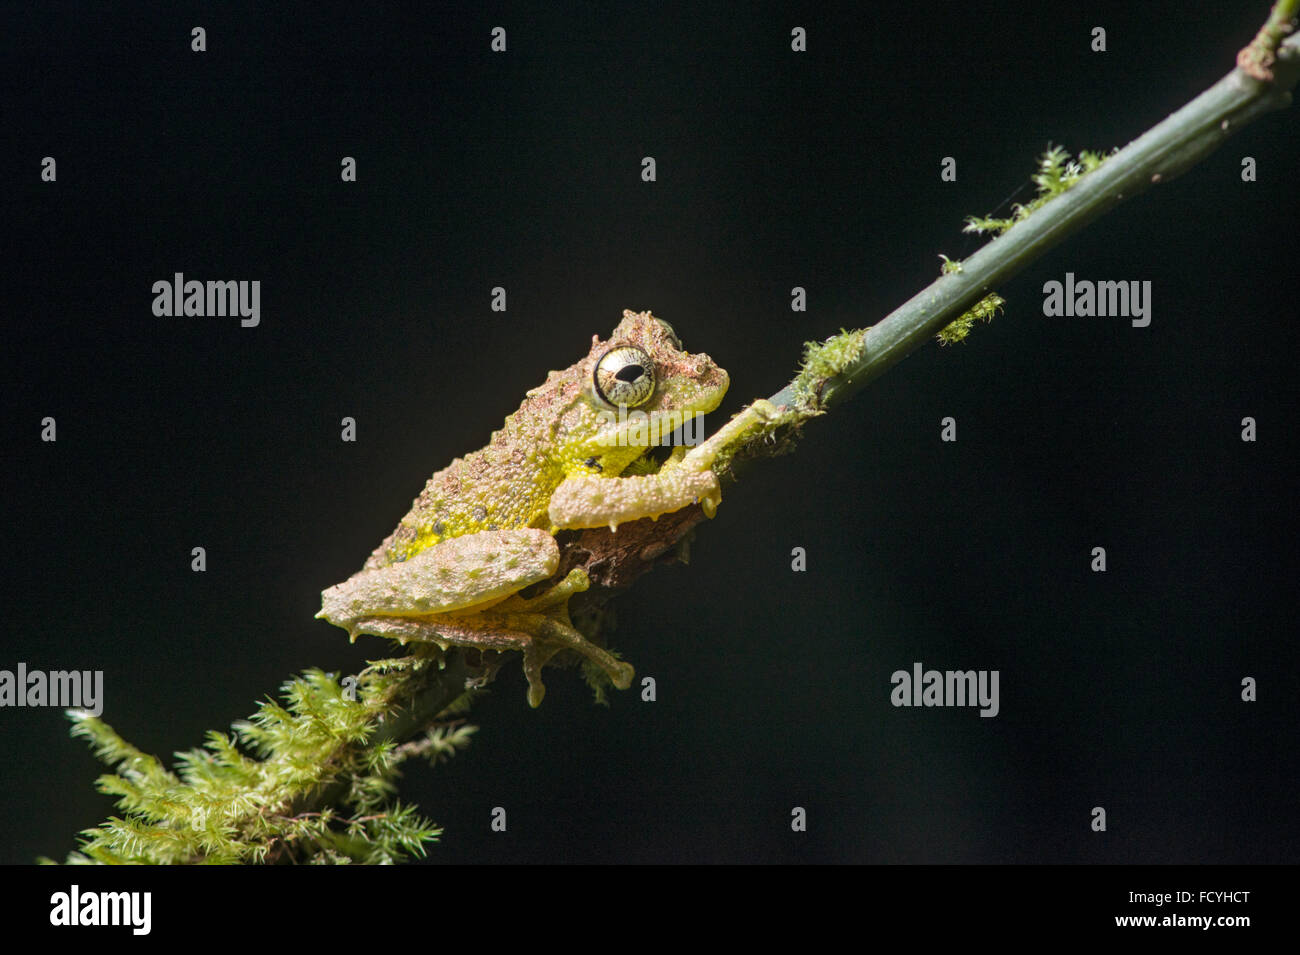 Mossy Tree Frog: Rhacophorus everetti. Sabah, Borneo. Taken at night Stock Photo